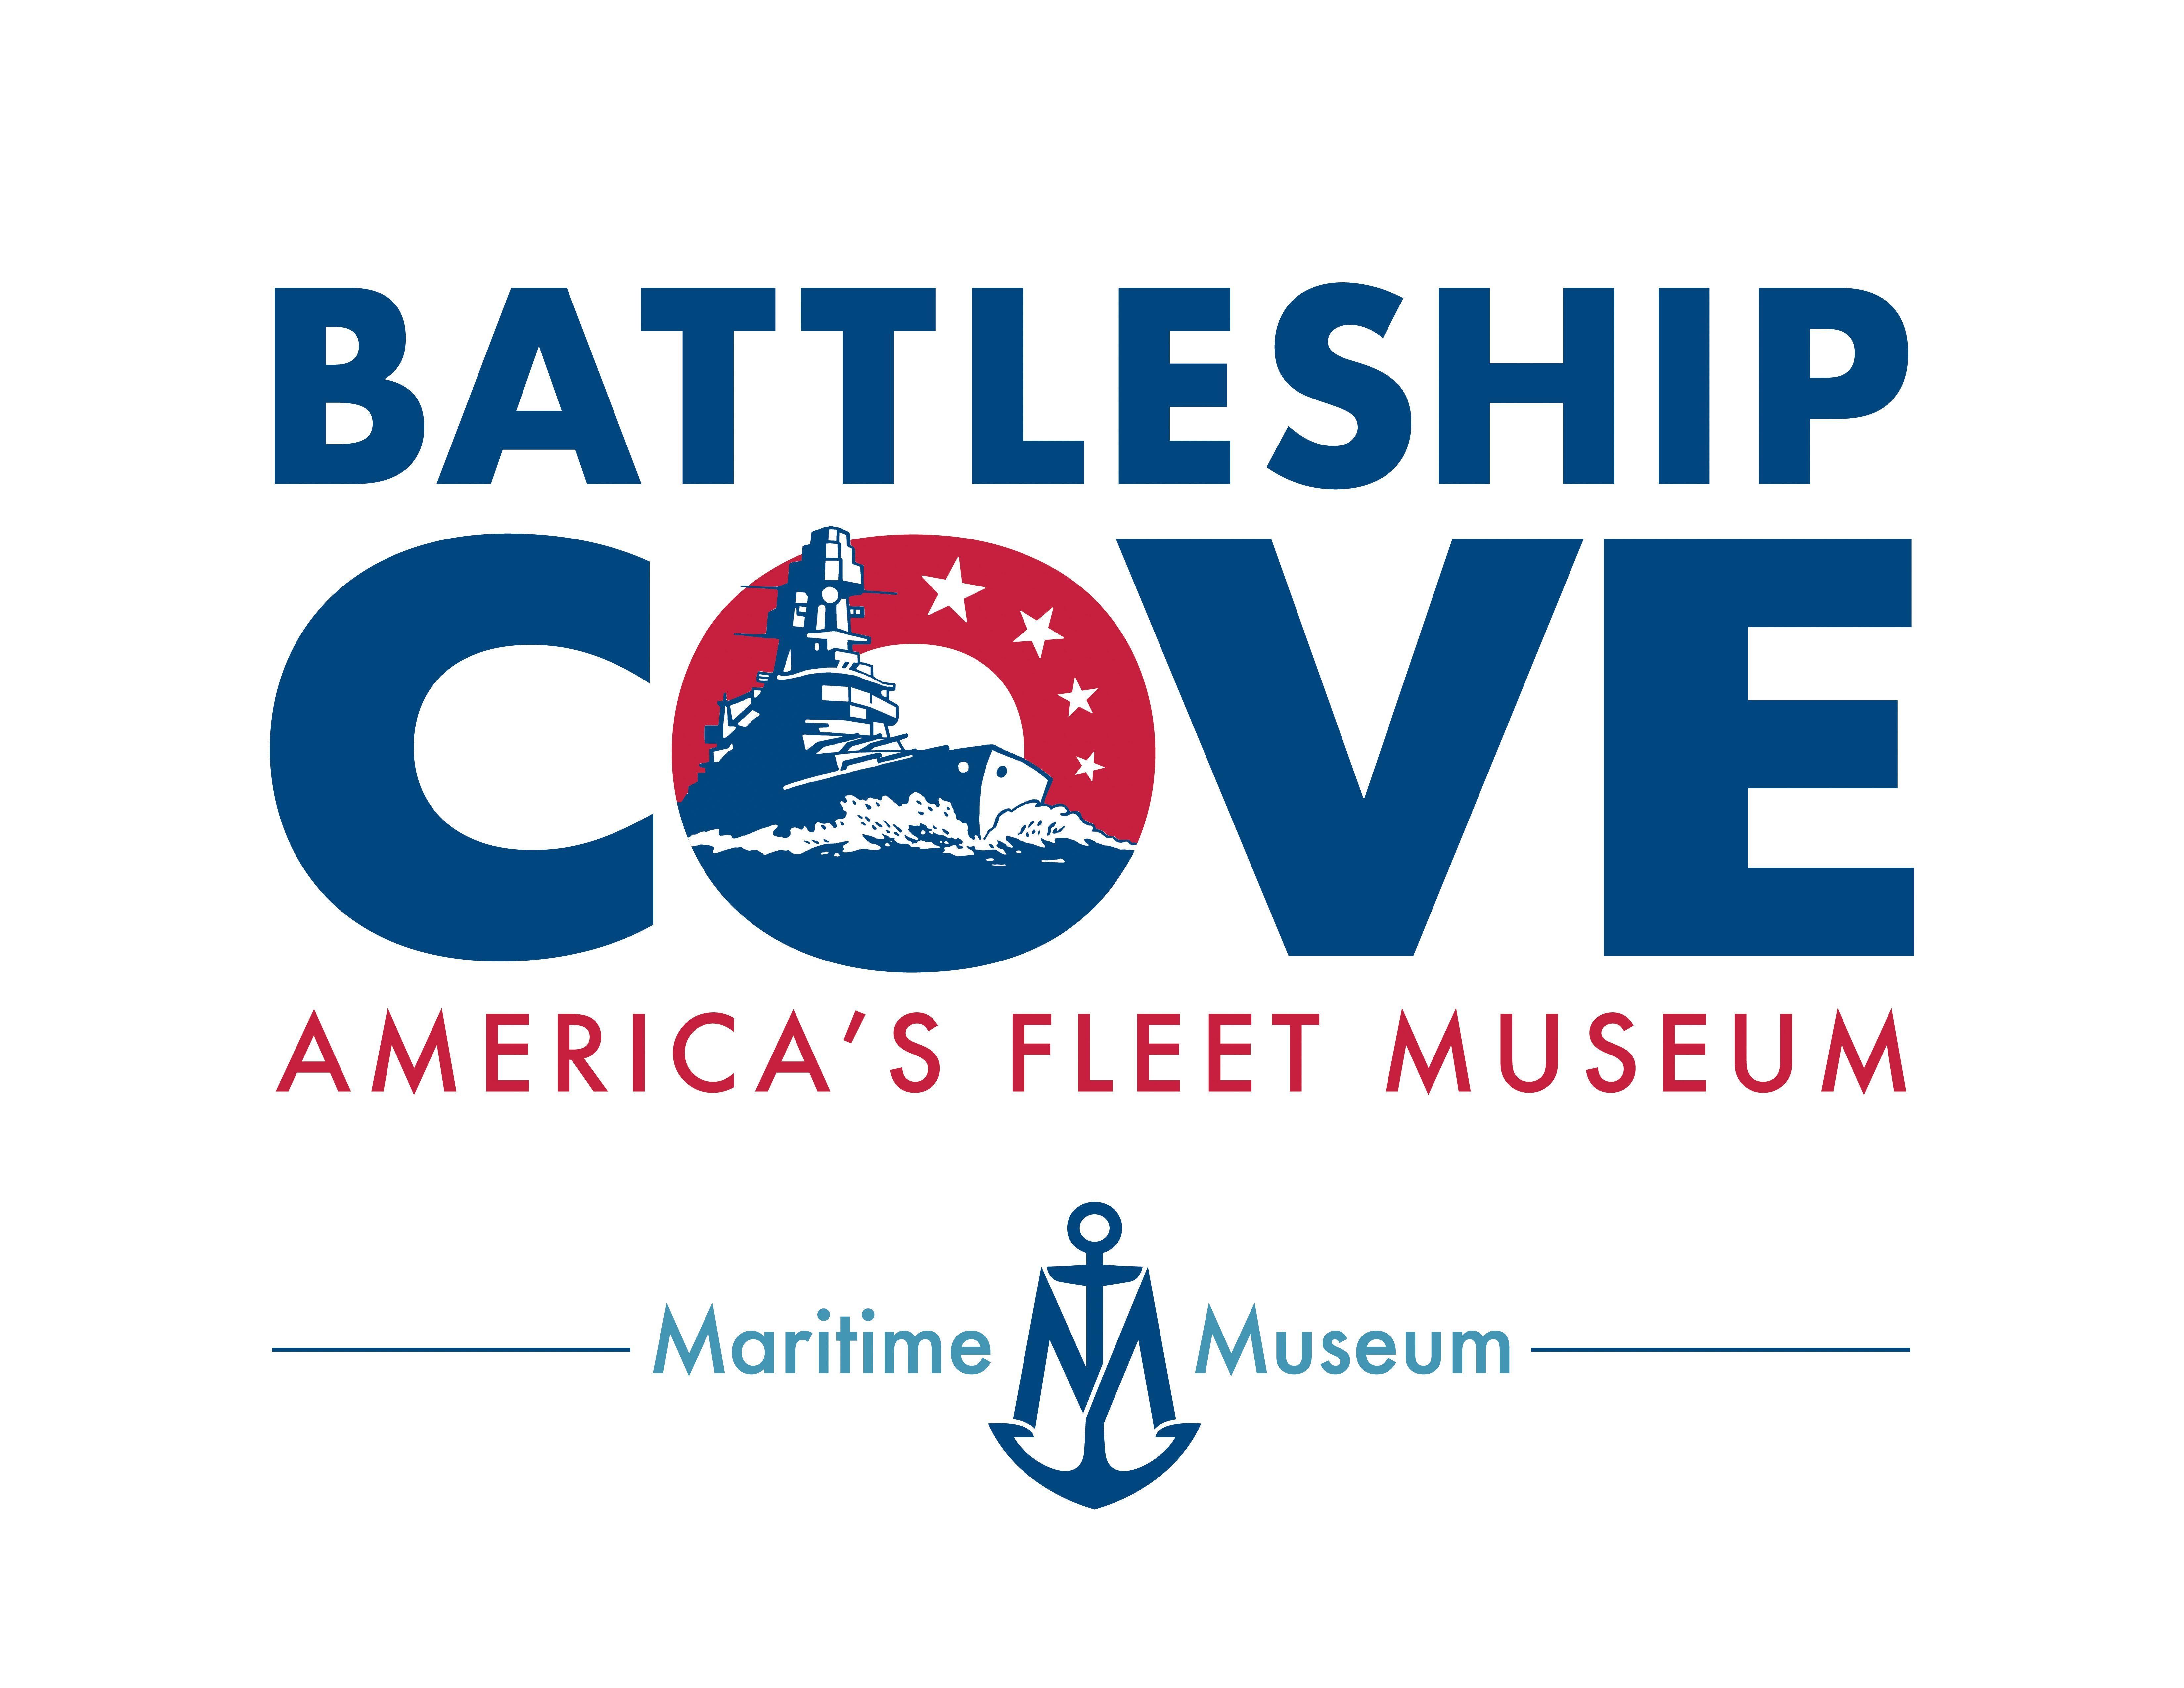 Battleship Logo - Battleship Cove: Fall River, MA: Naval & Maritime Museum